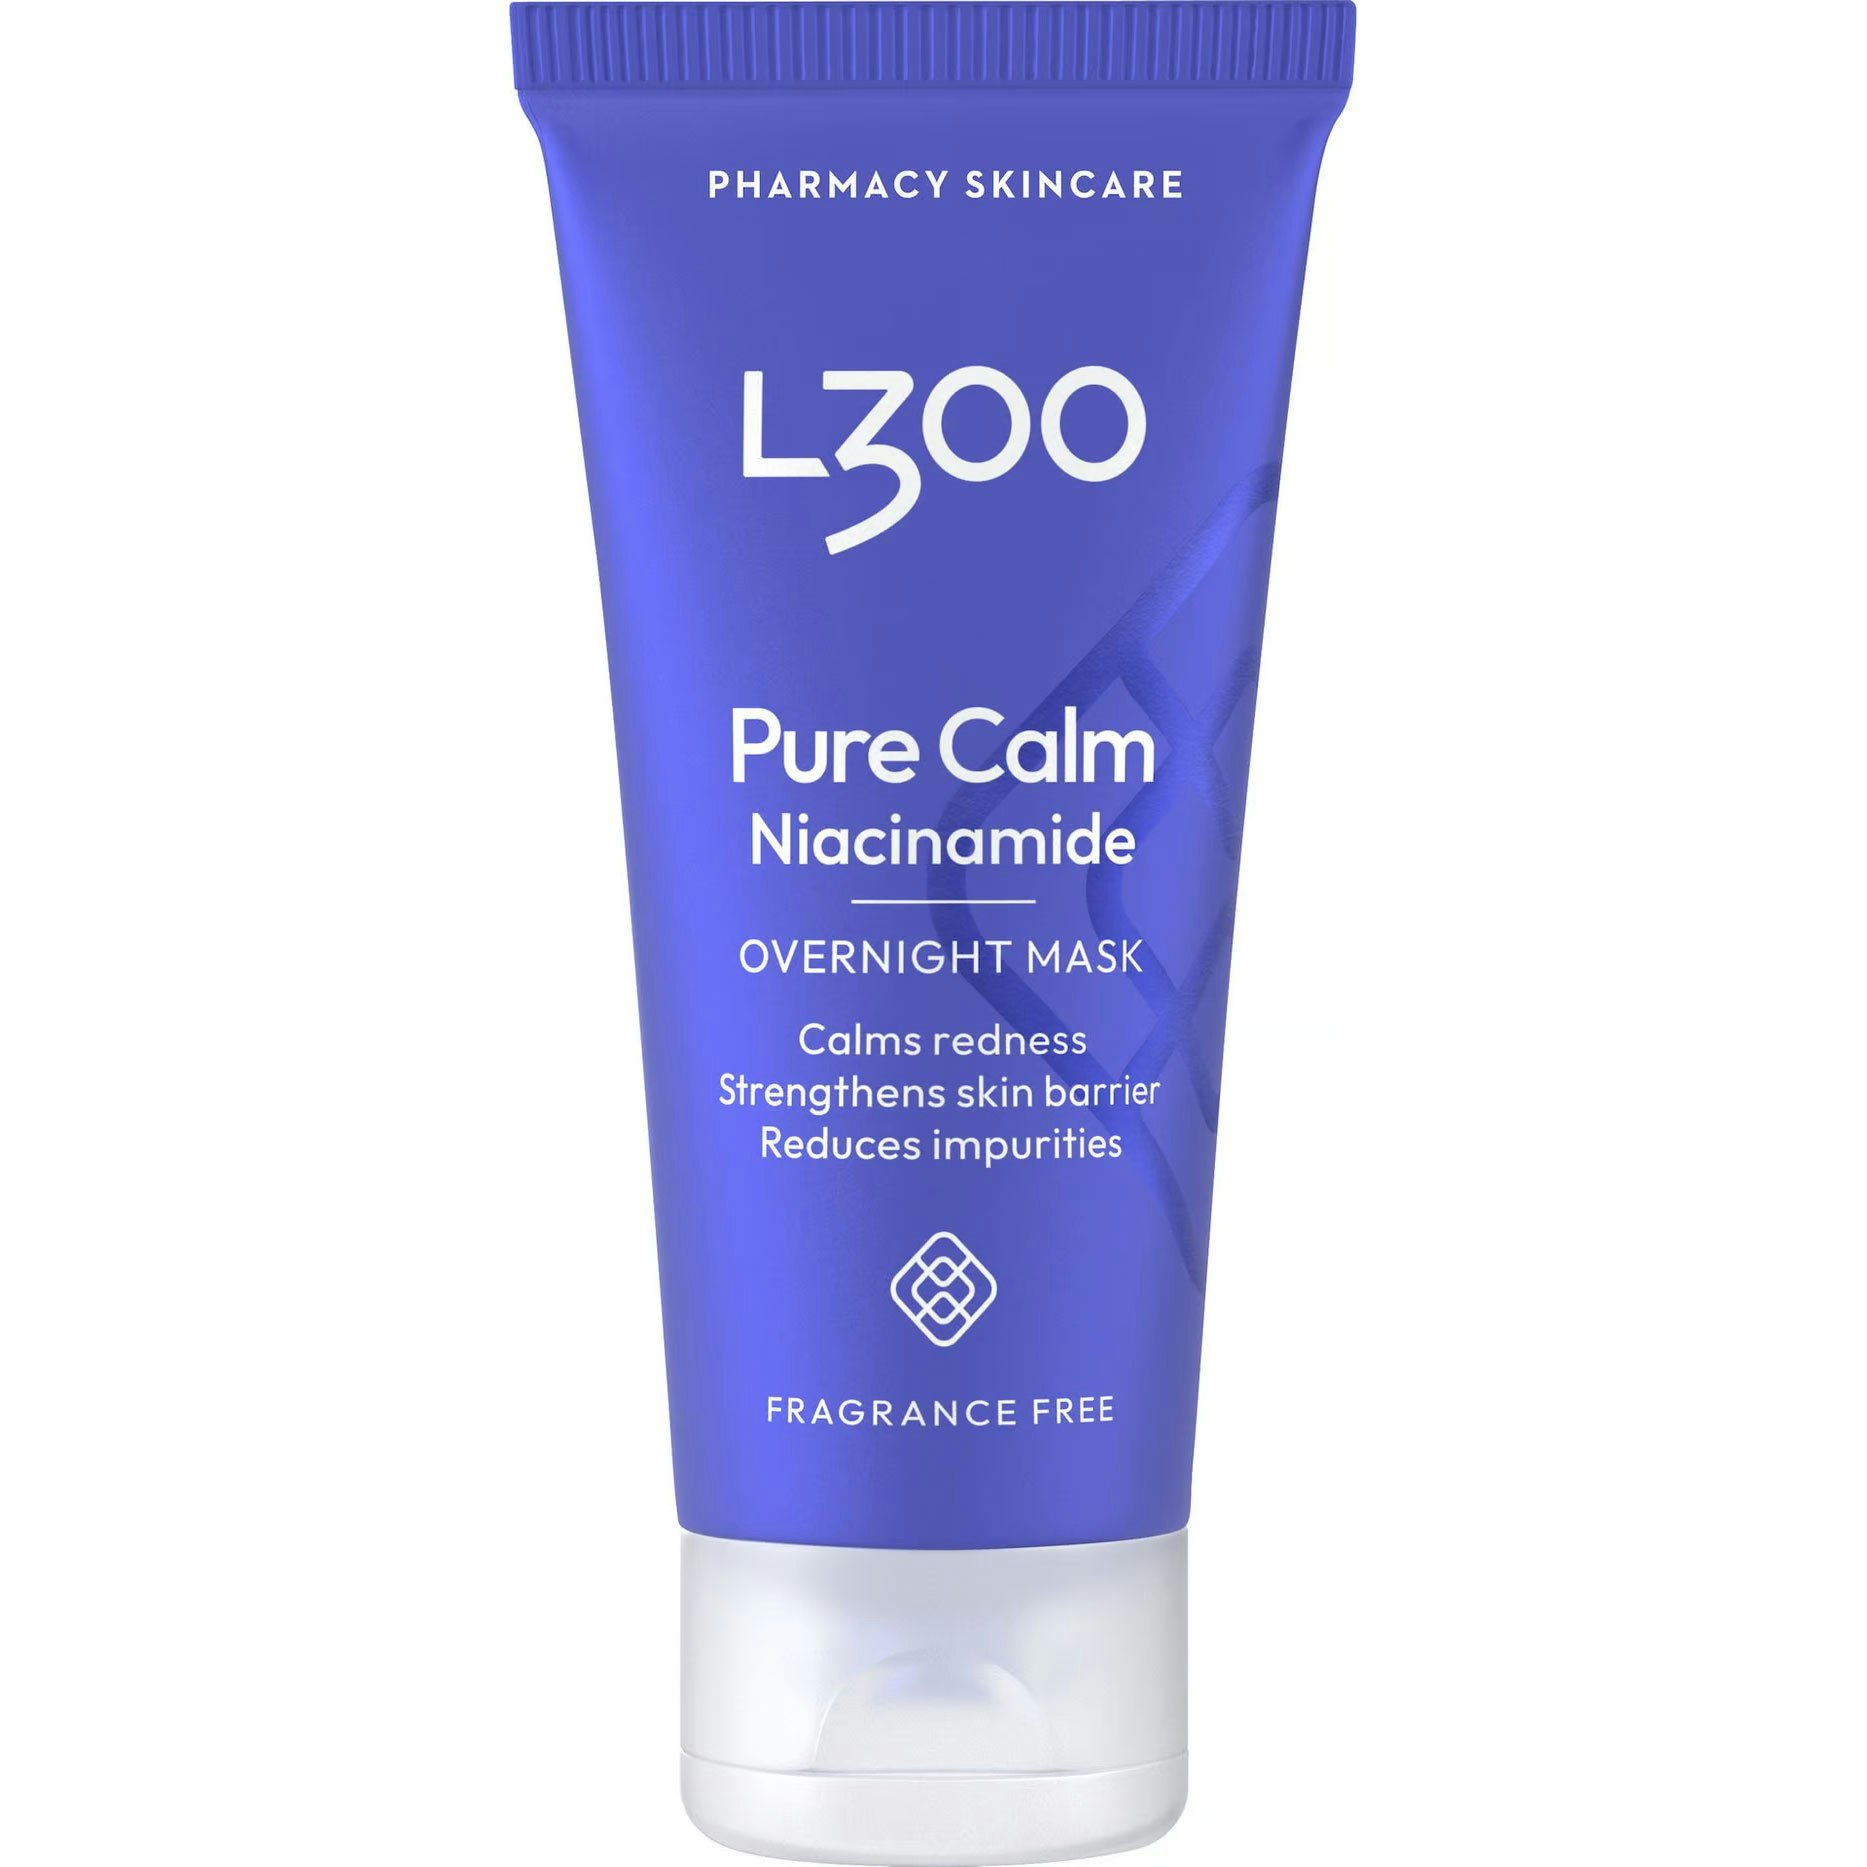 L300 Niacinamide Pure Calm Overnight Mask - 60 ml